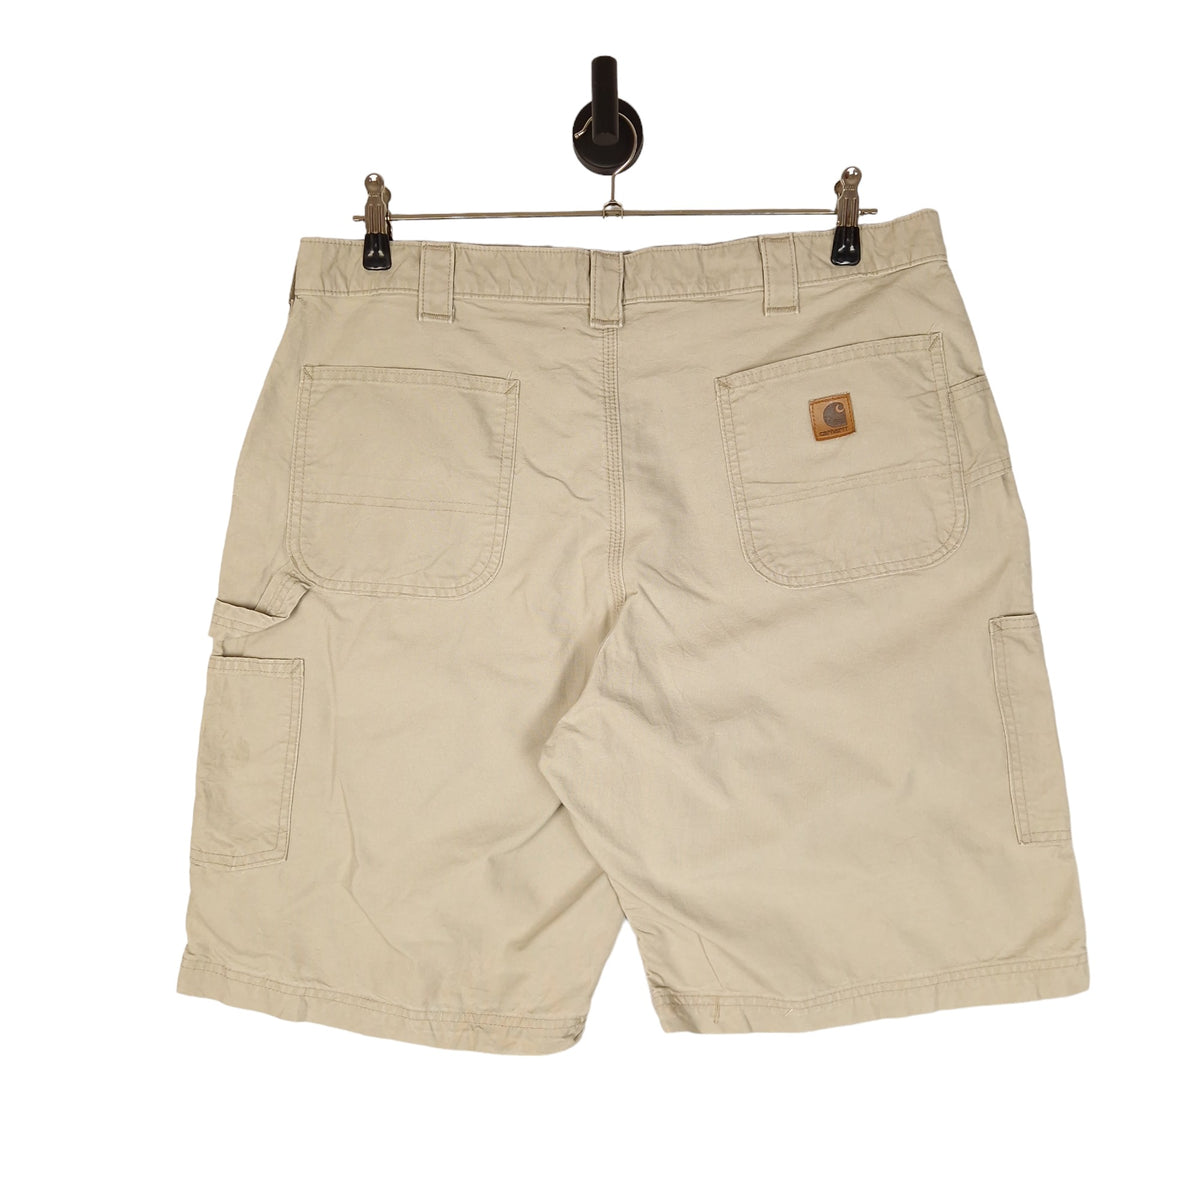 Carhartt Carpenter Shorts - Size W40